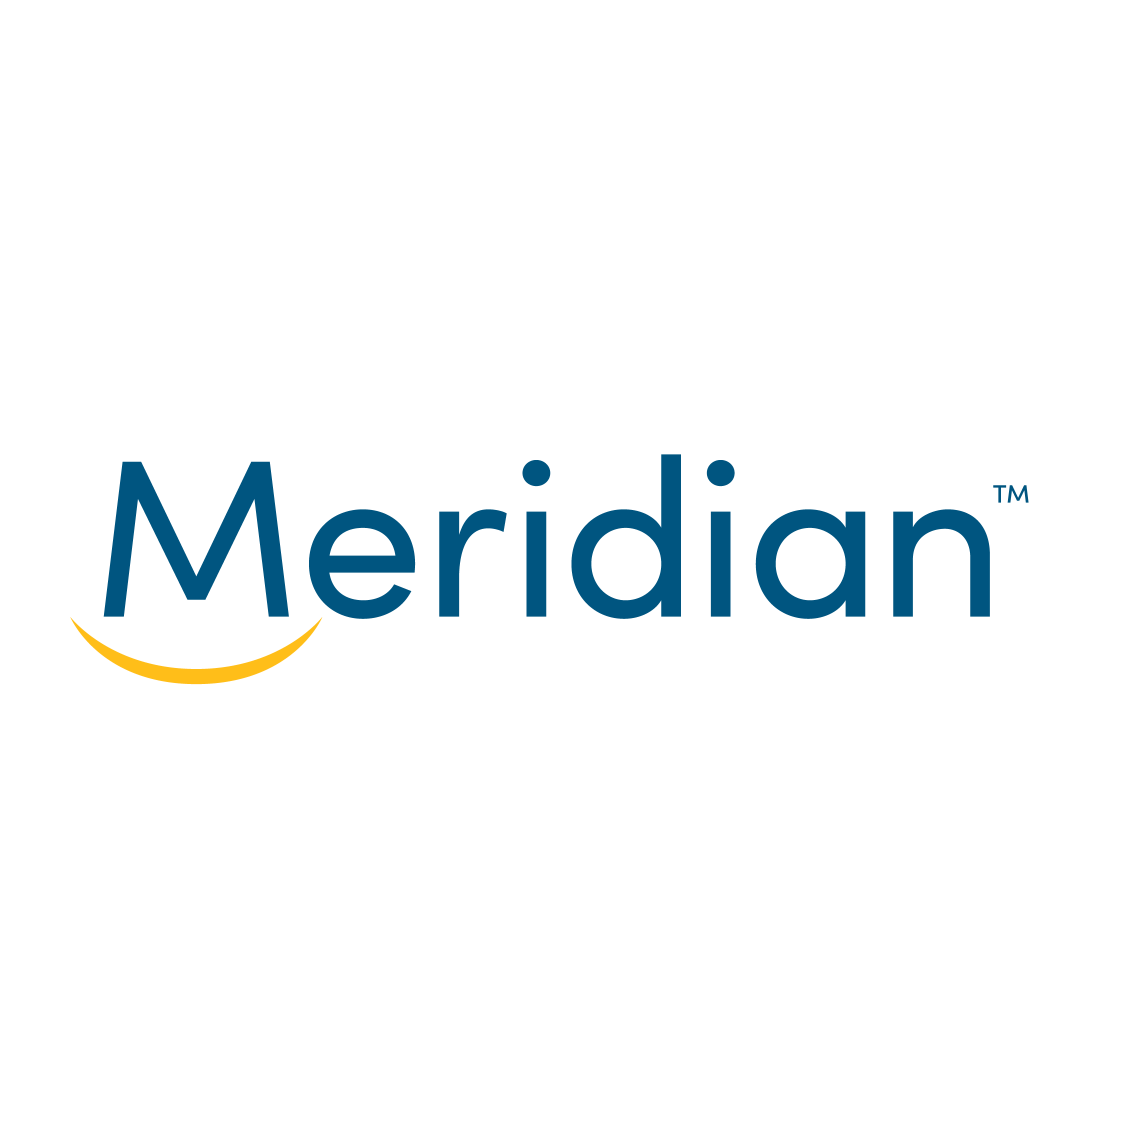 Meridian Credit Union's logo